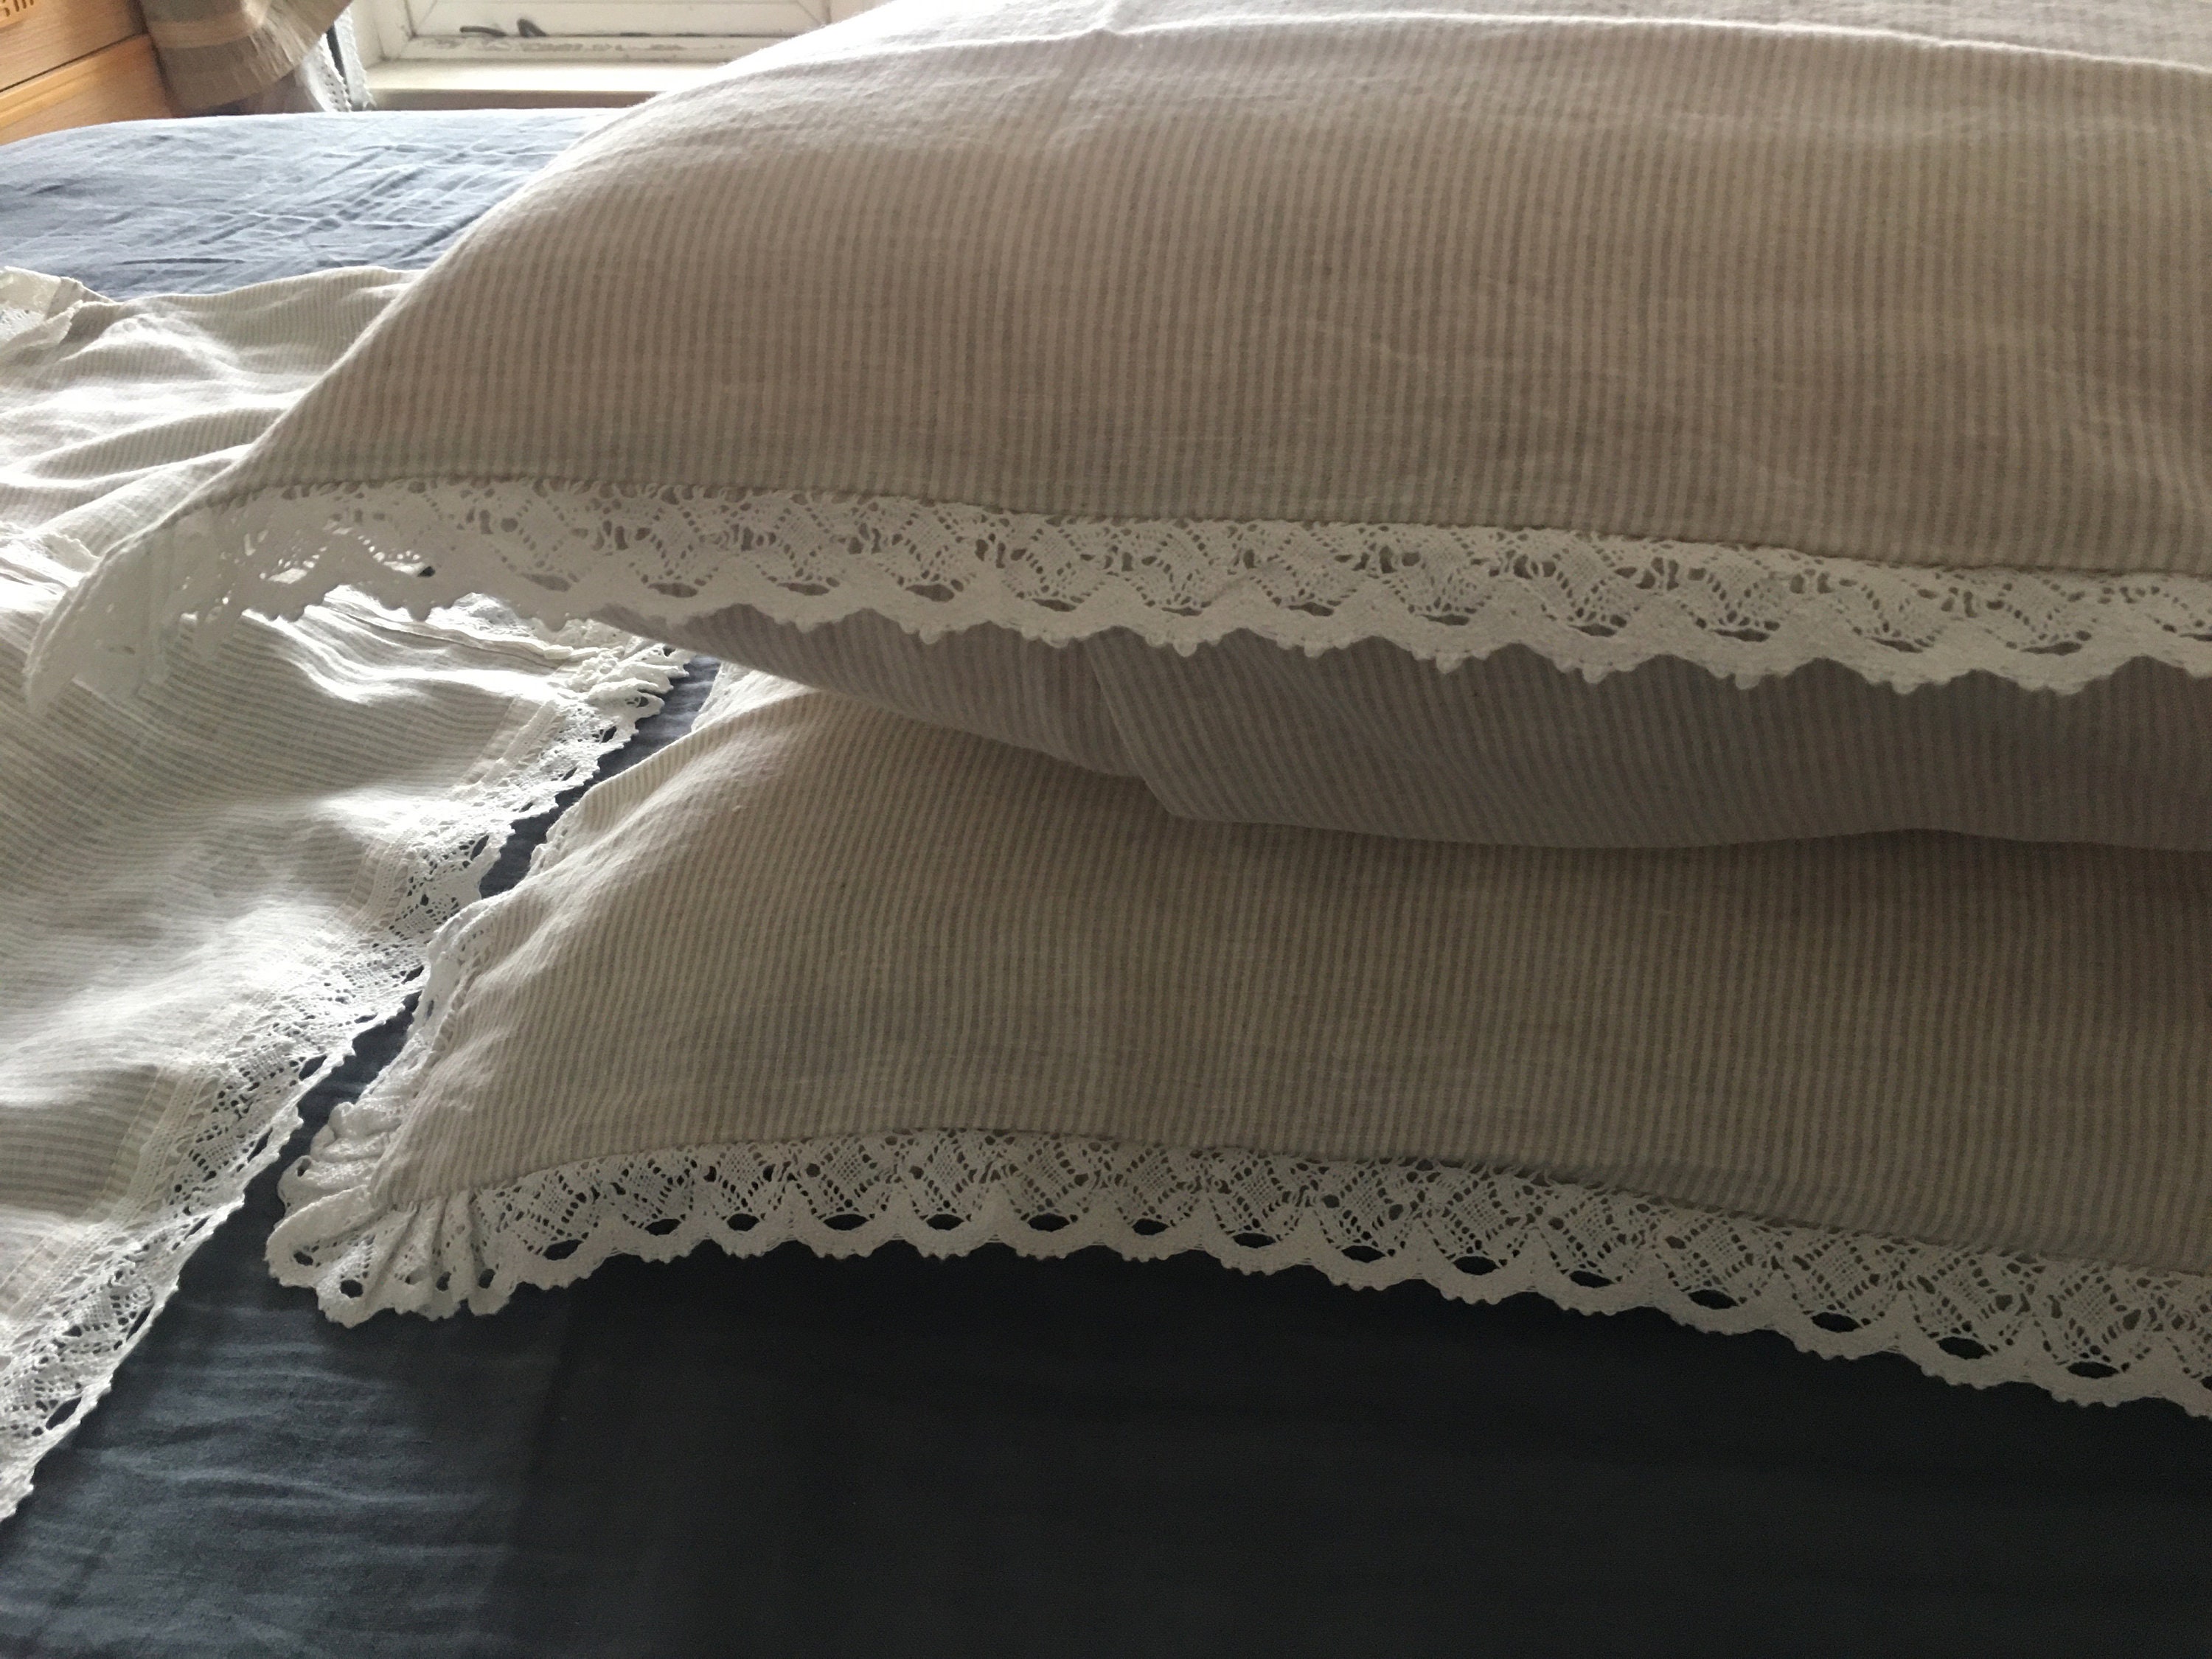 Stone washed Linen Bedding set striped linen sheet set | Etsy